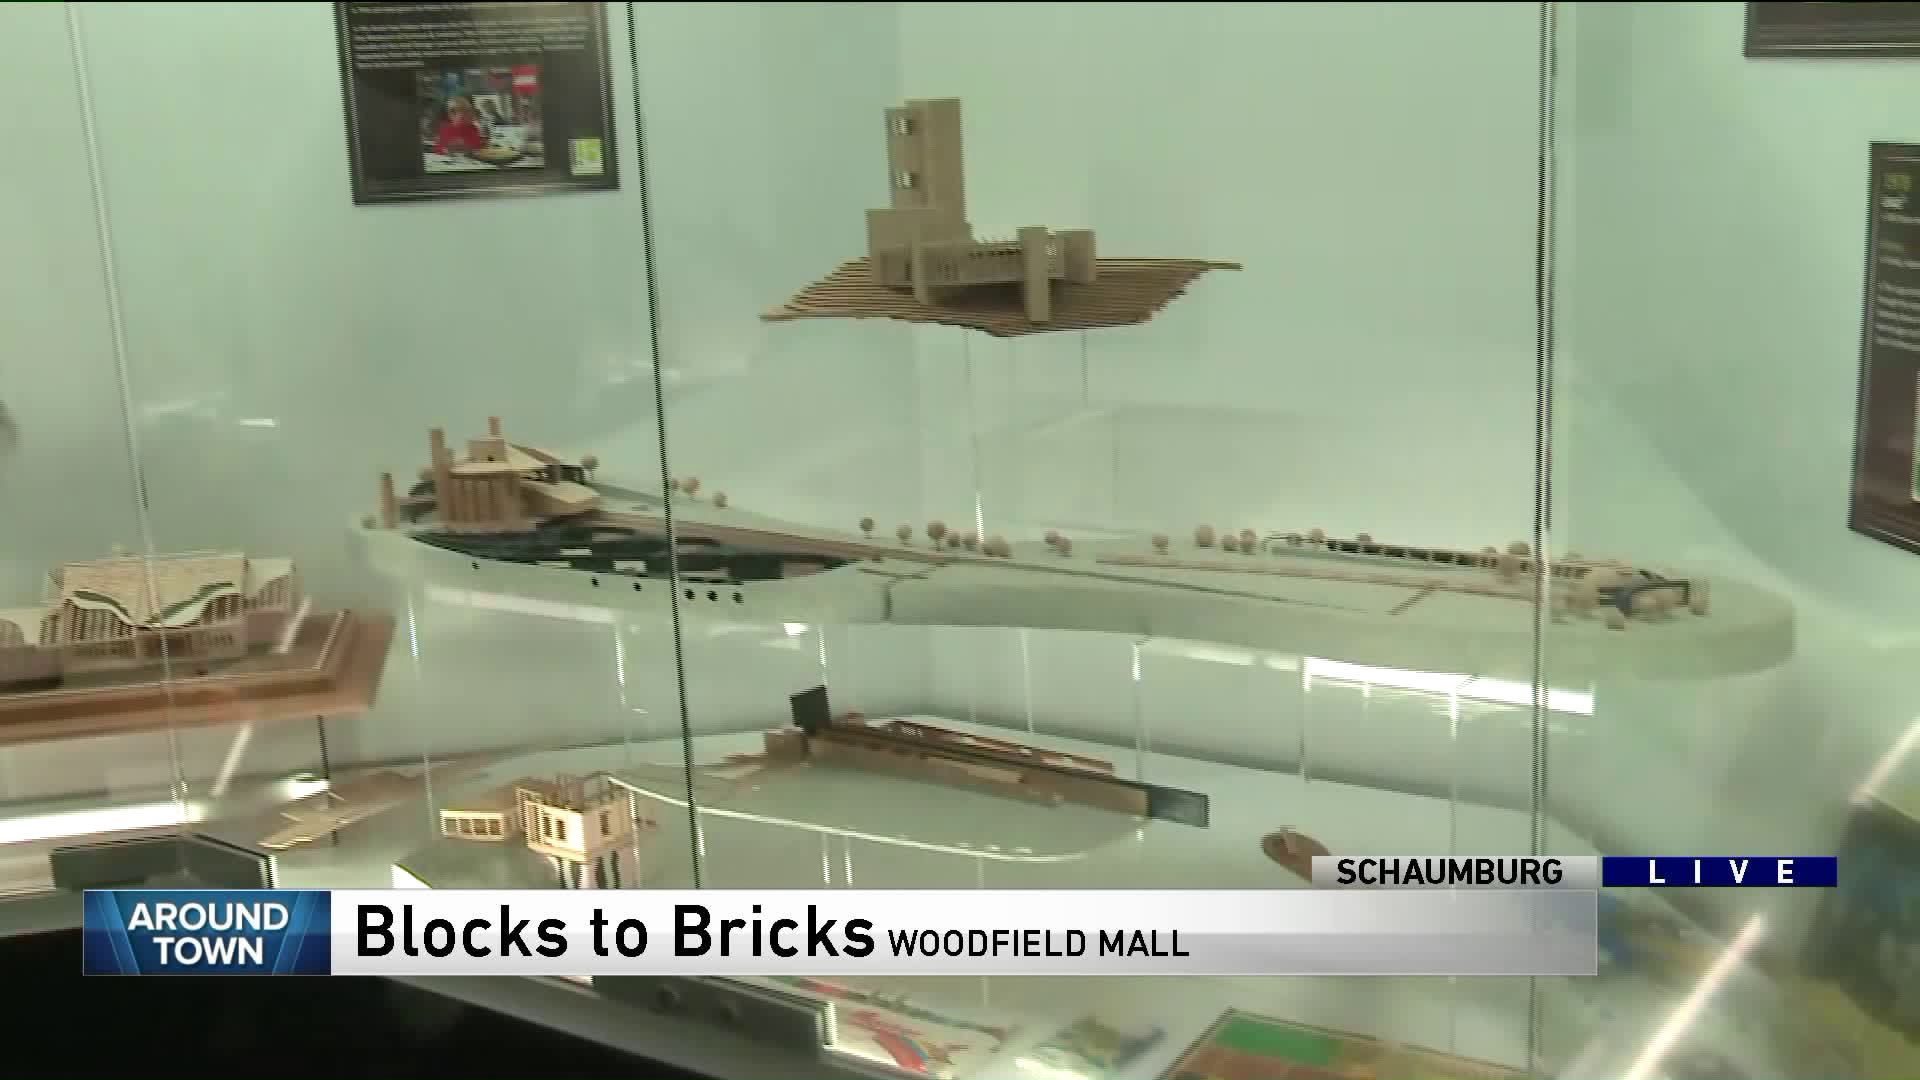 Around Town checks back in with Blocks to Bricks